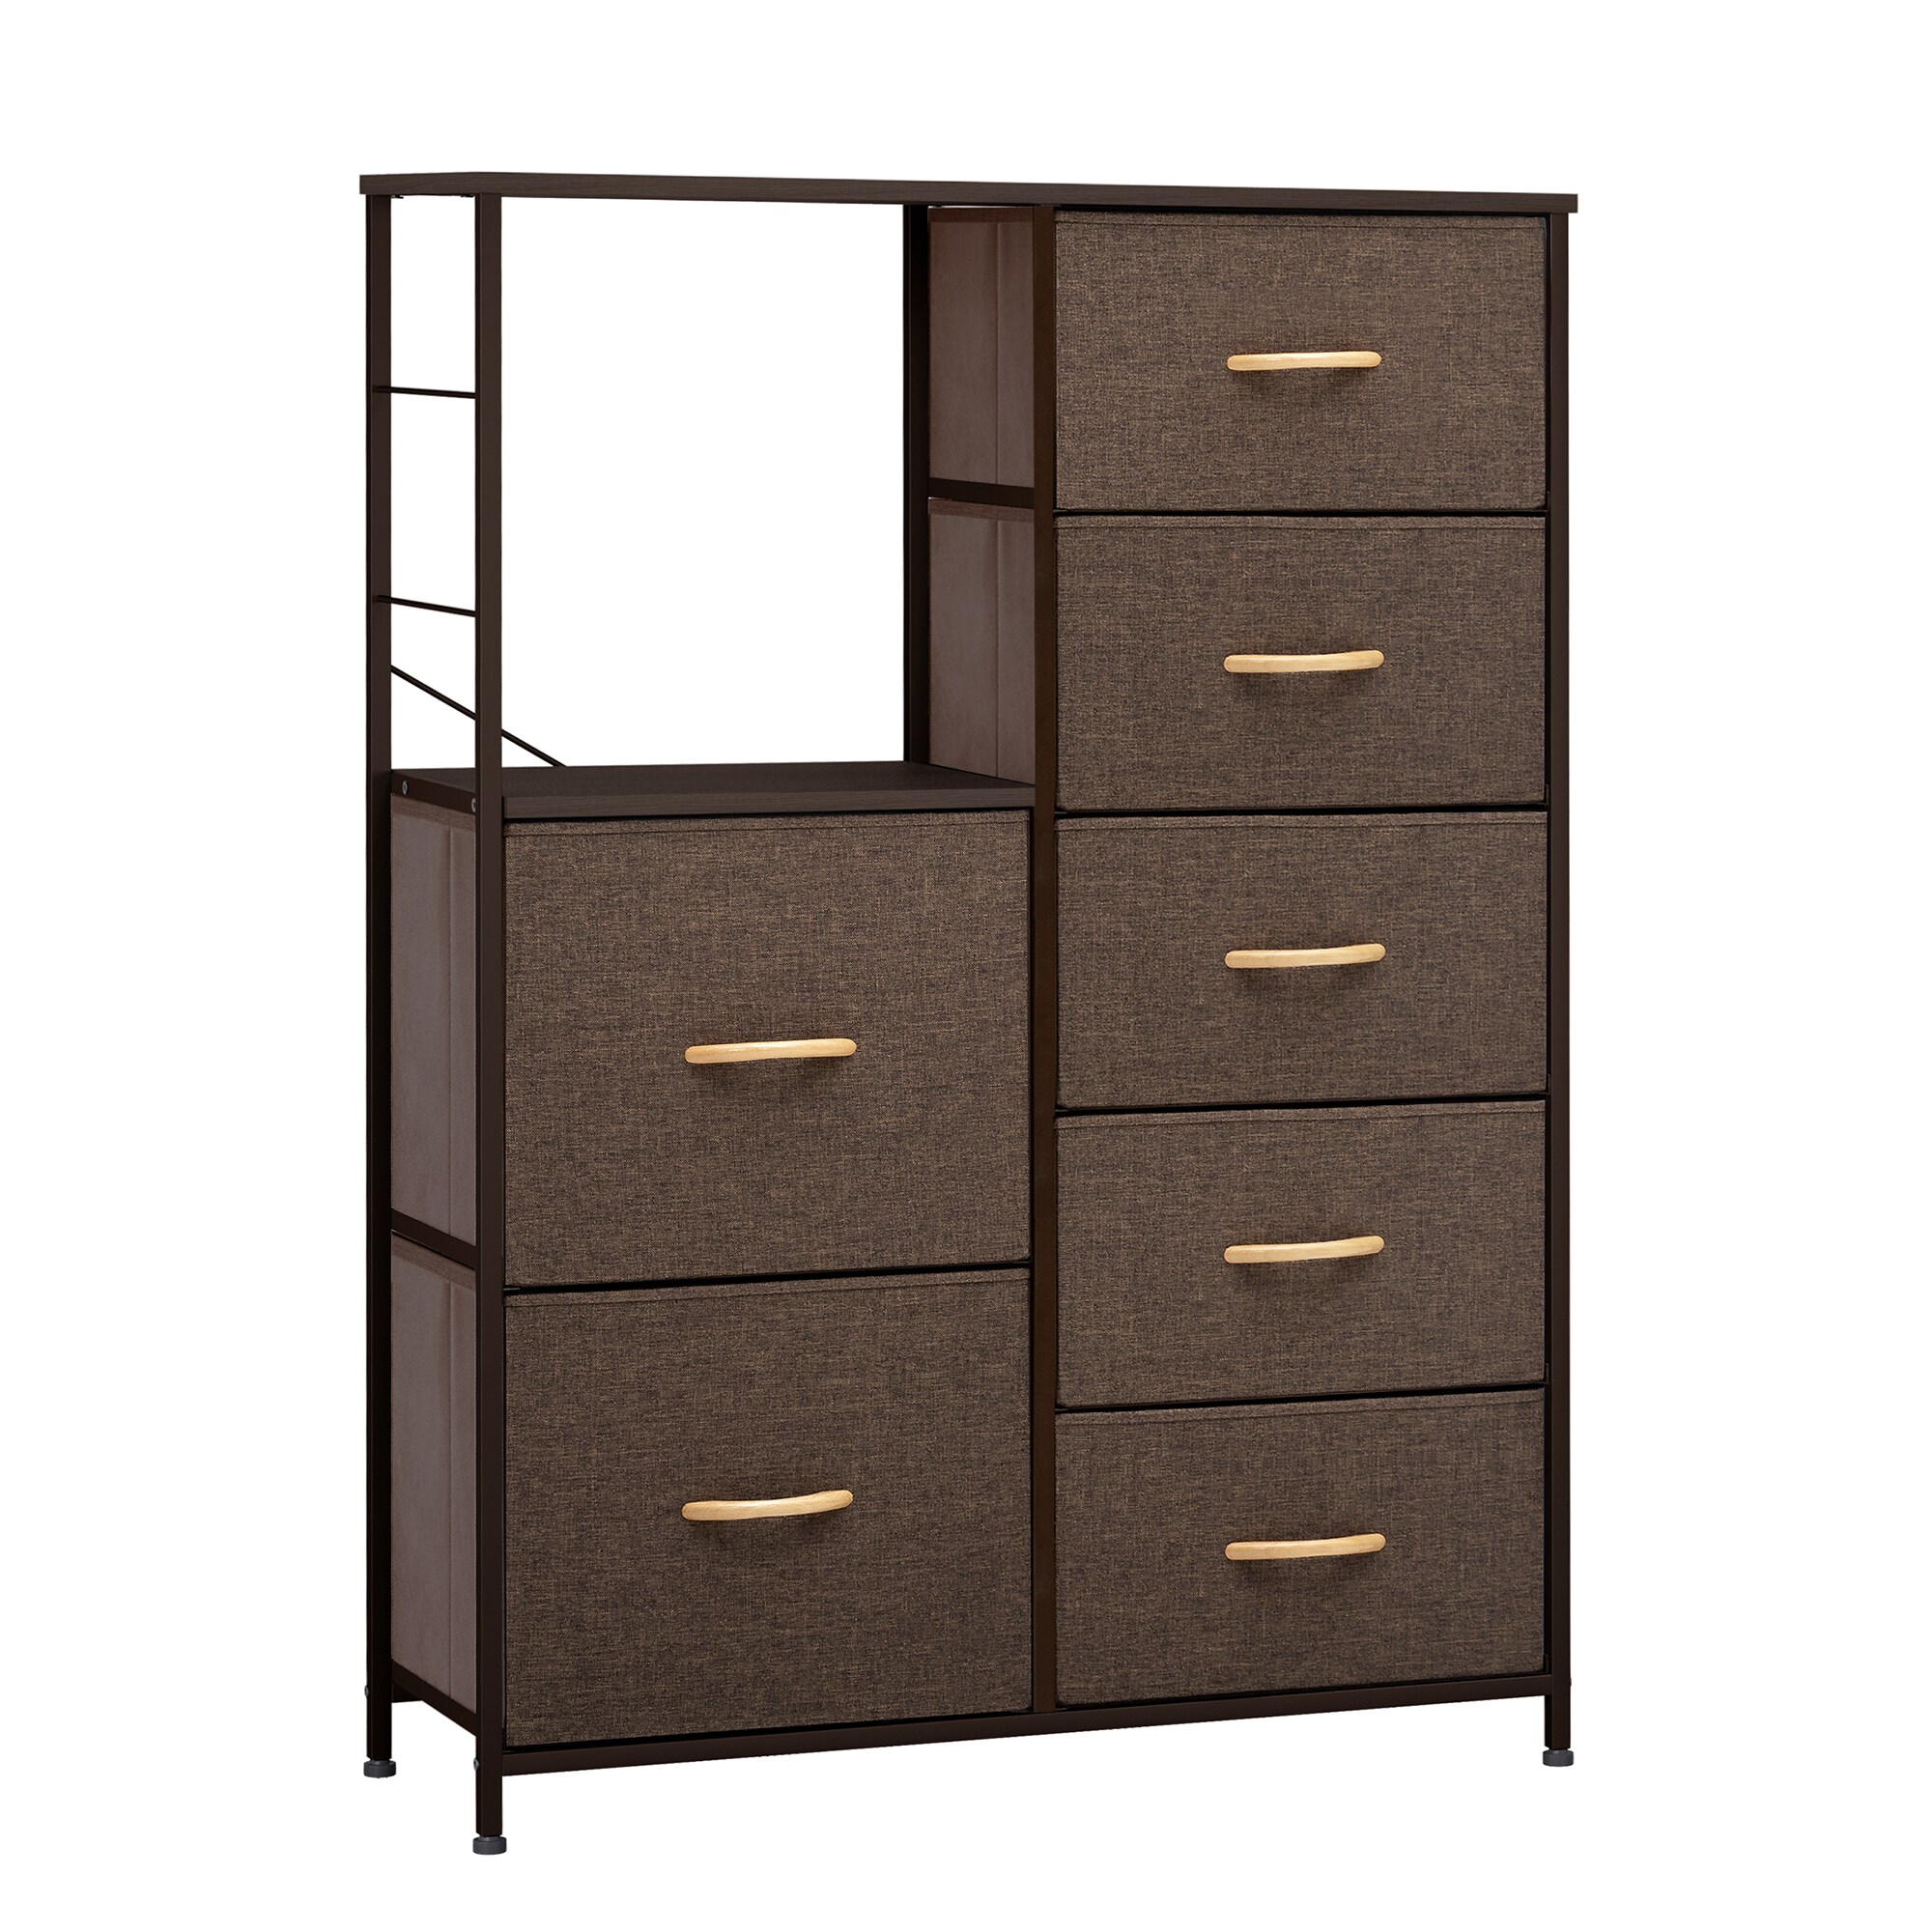 7 Drawer Fabric Dresser Storage Tower Organizer Unit for Bedroom Closet  Entryway